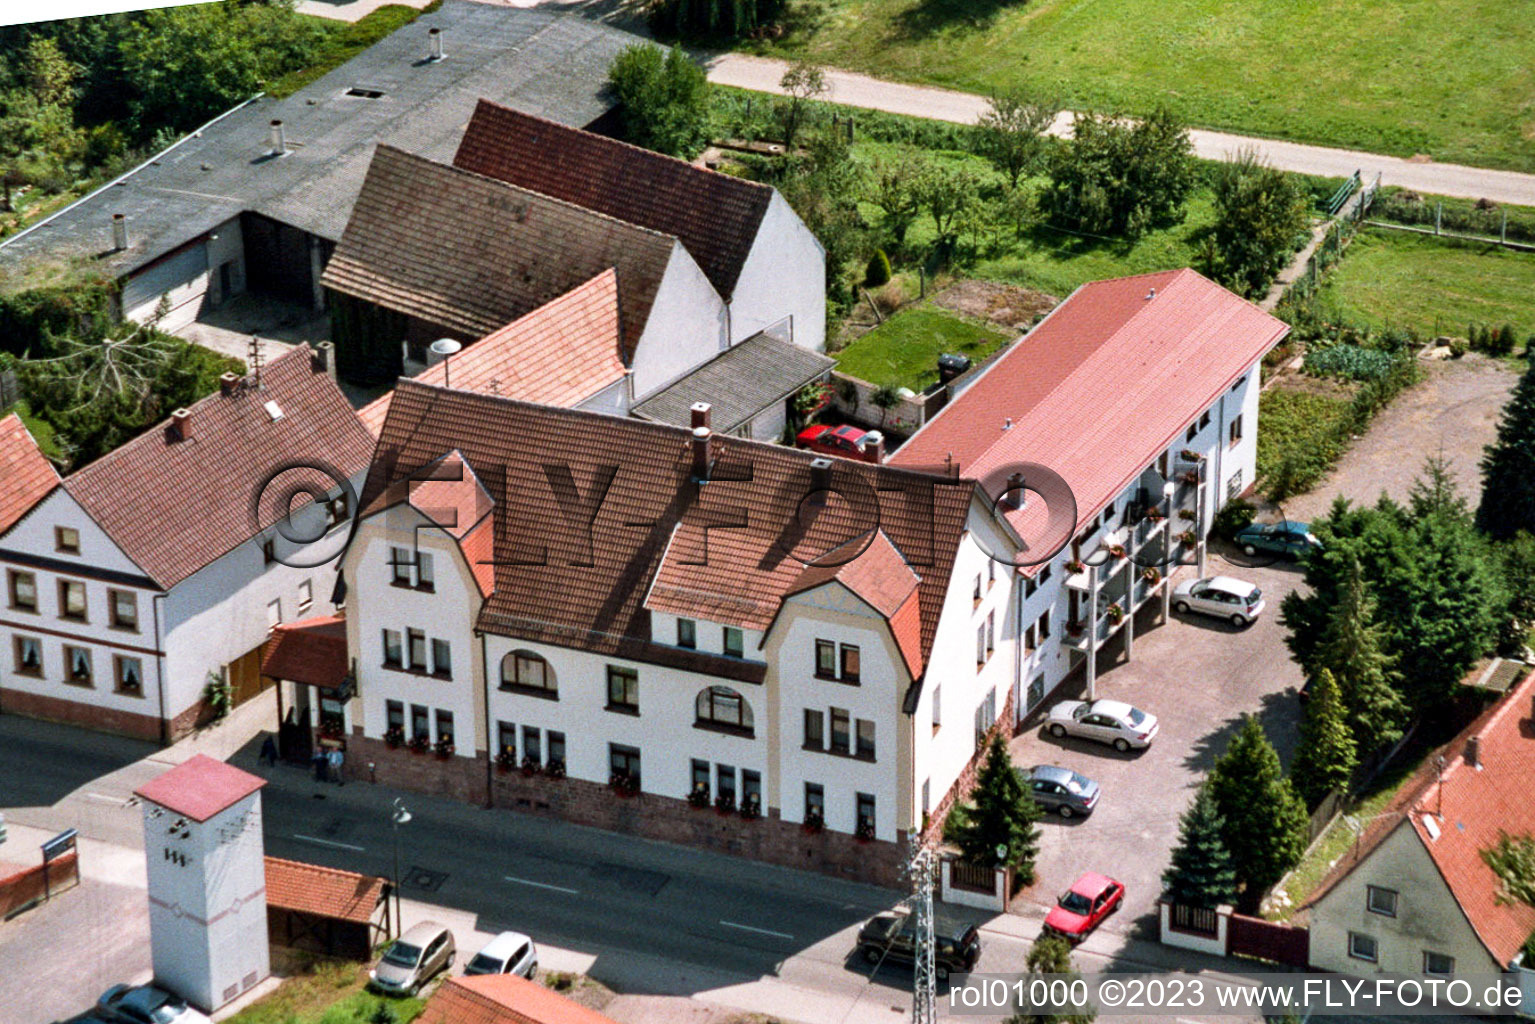 Saarstrasse Hotel Pfälzer Hof in Kandel in the state Rhineland-Palatinate, Germany